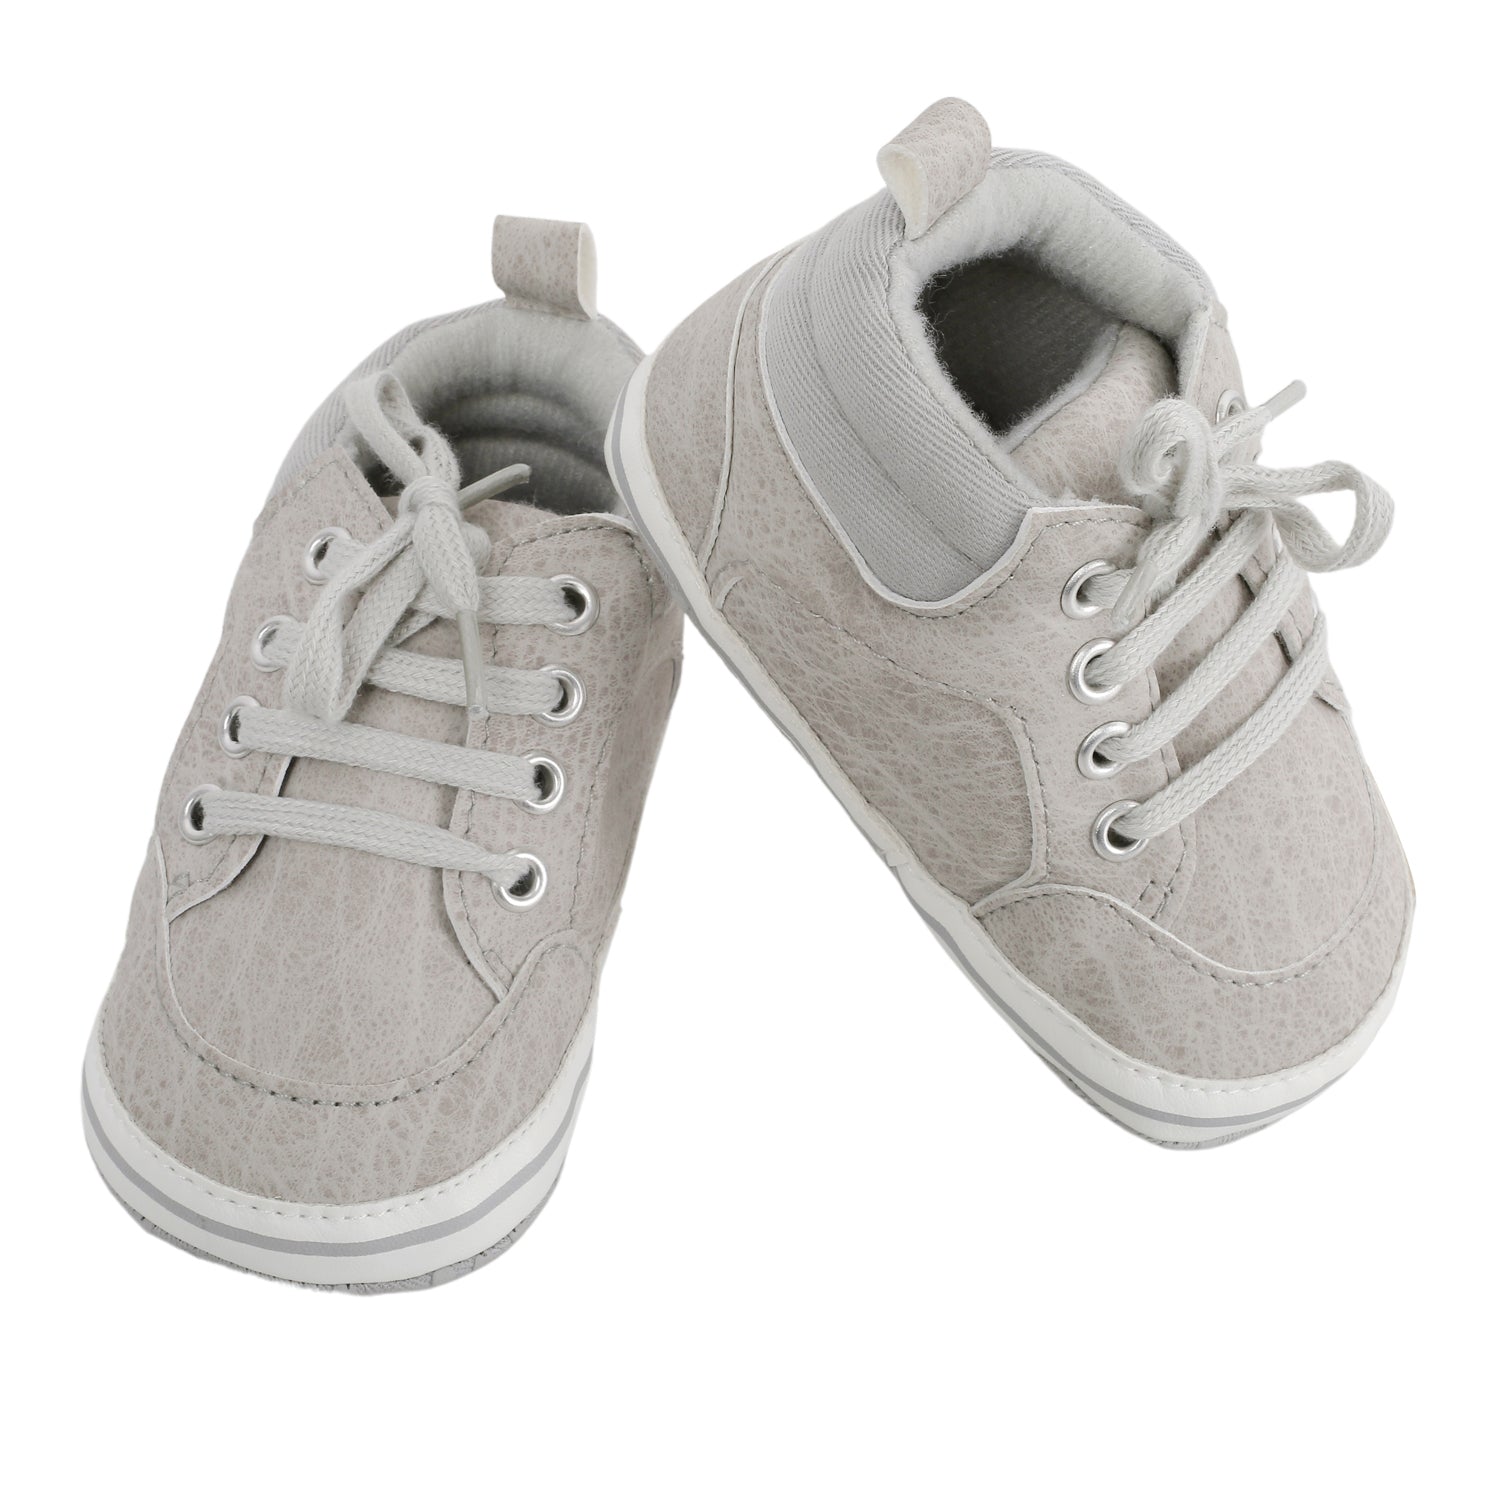 Buy Kids' Tennis Shoes TS100 - White Online | Decathlon